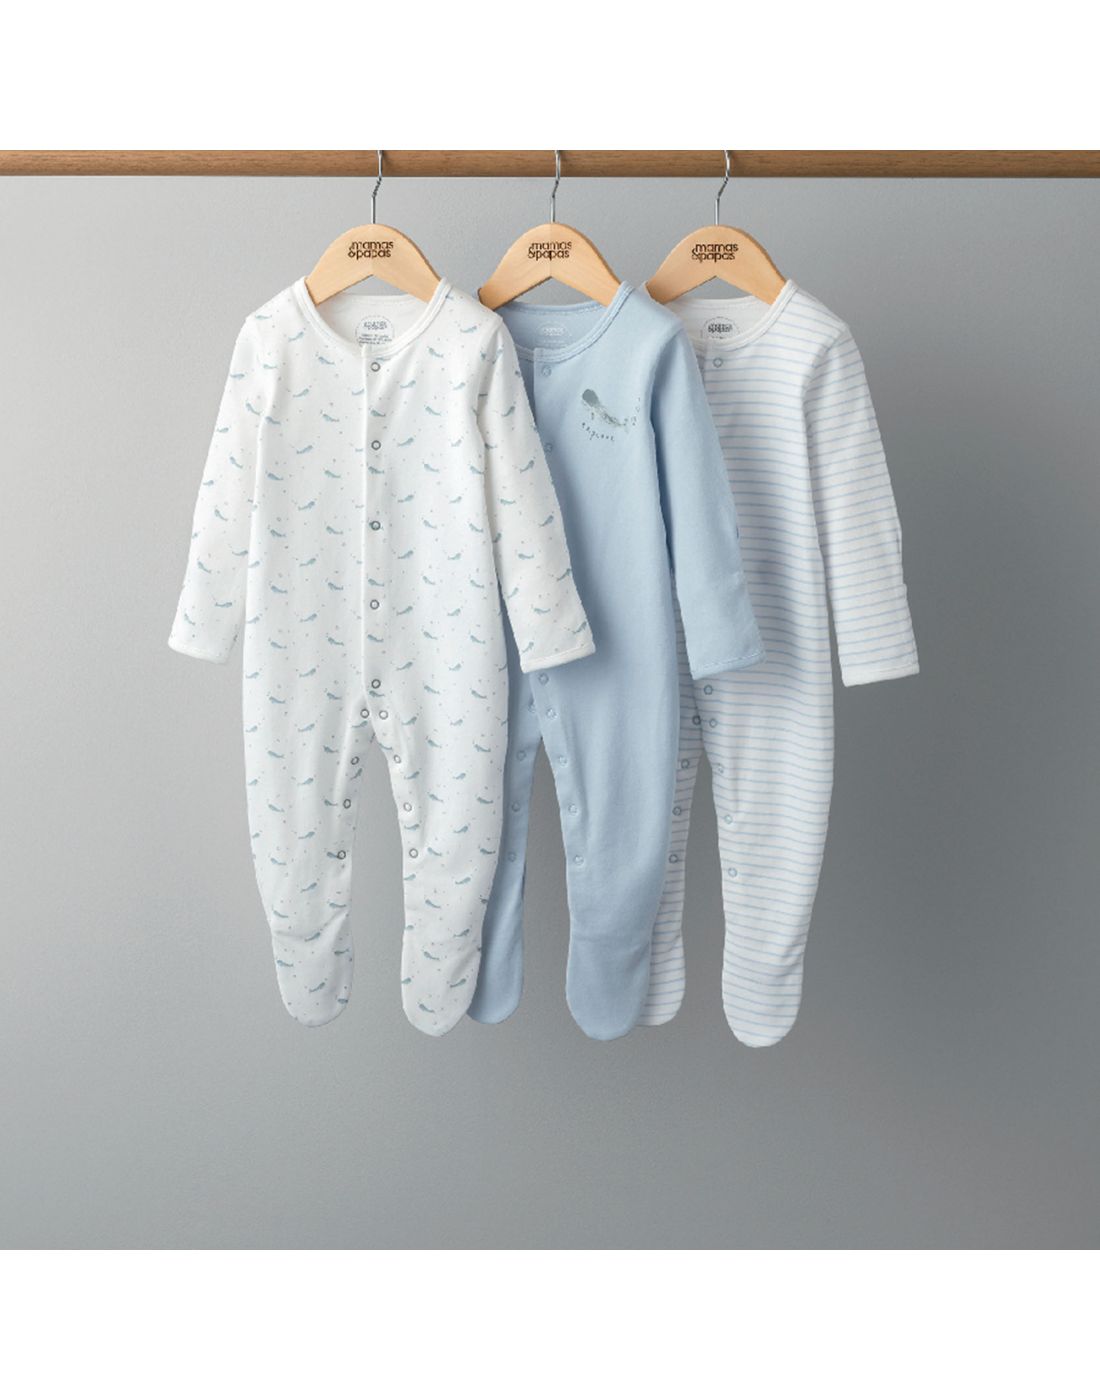 Mamas & Papas Whales Cotton Sleepsuits 3 Pack